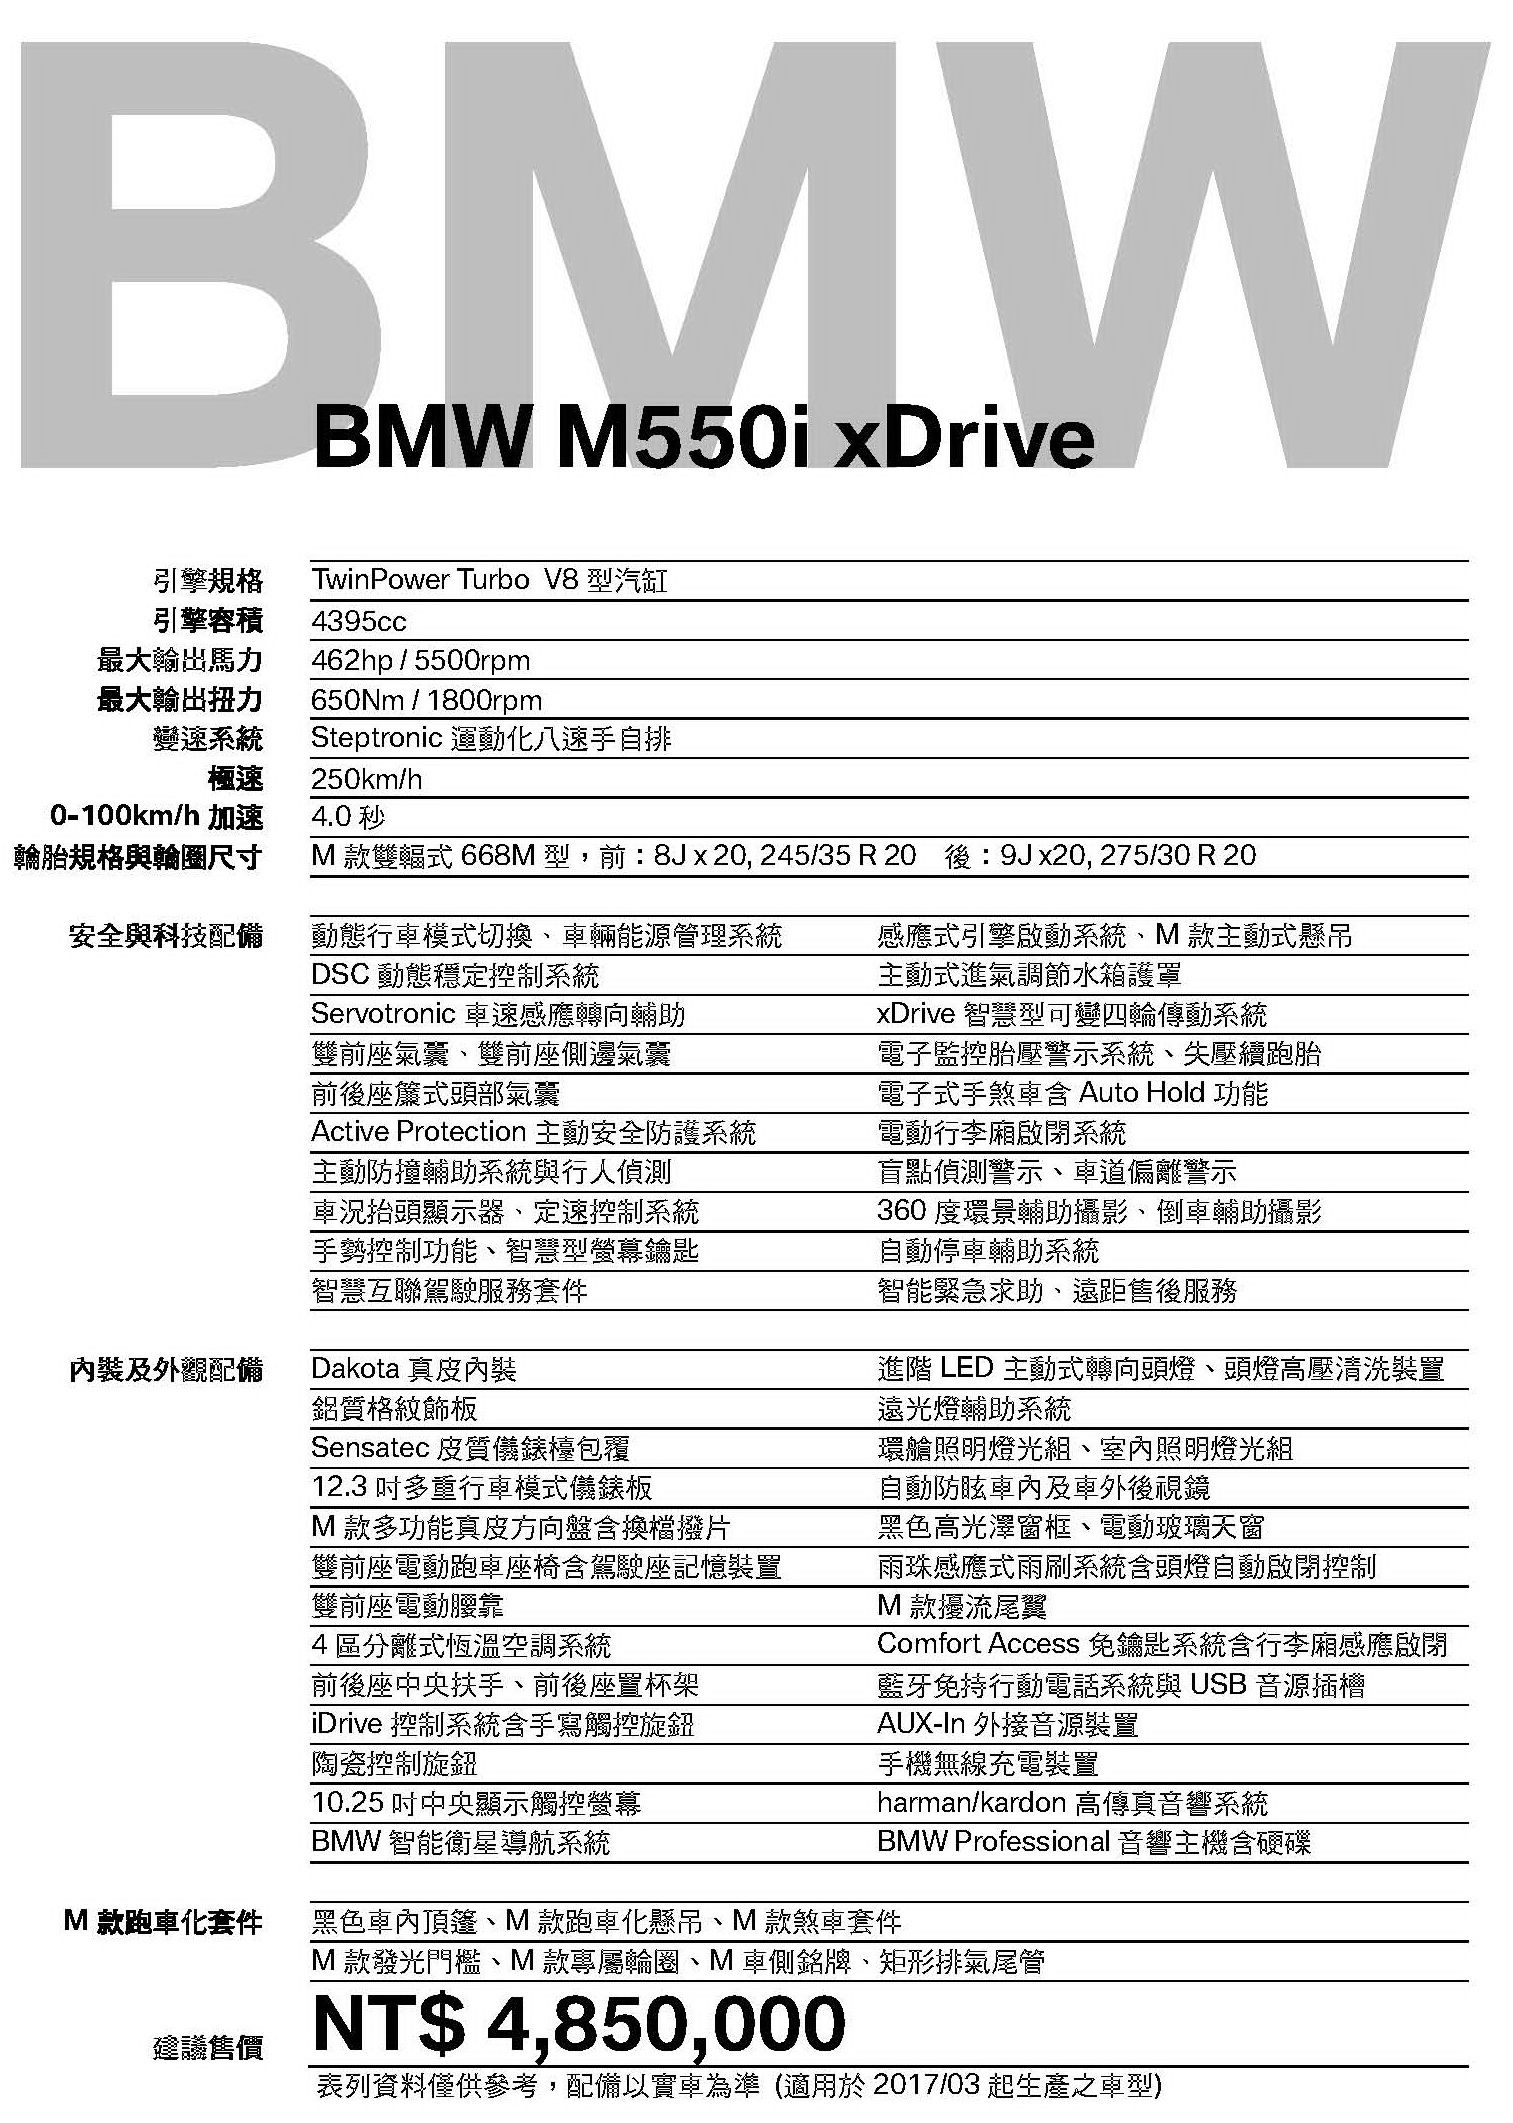 車展表M550i xDrive_2017-03__485